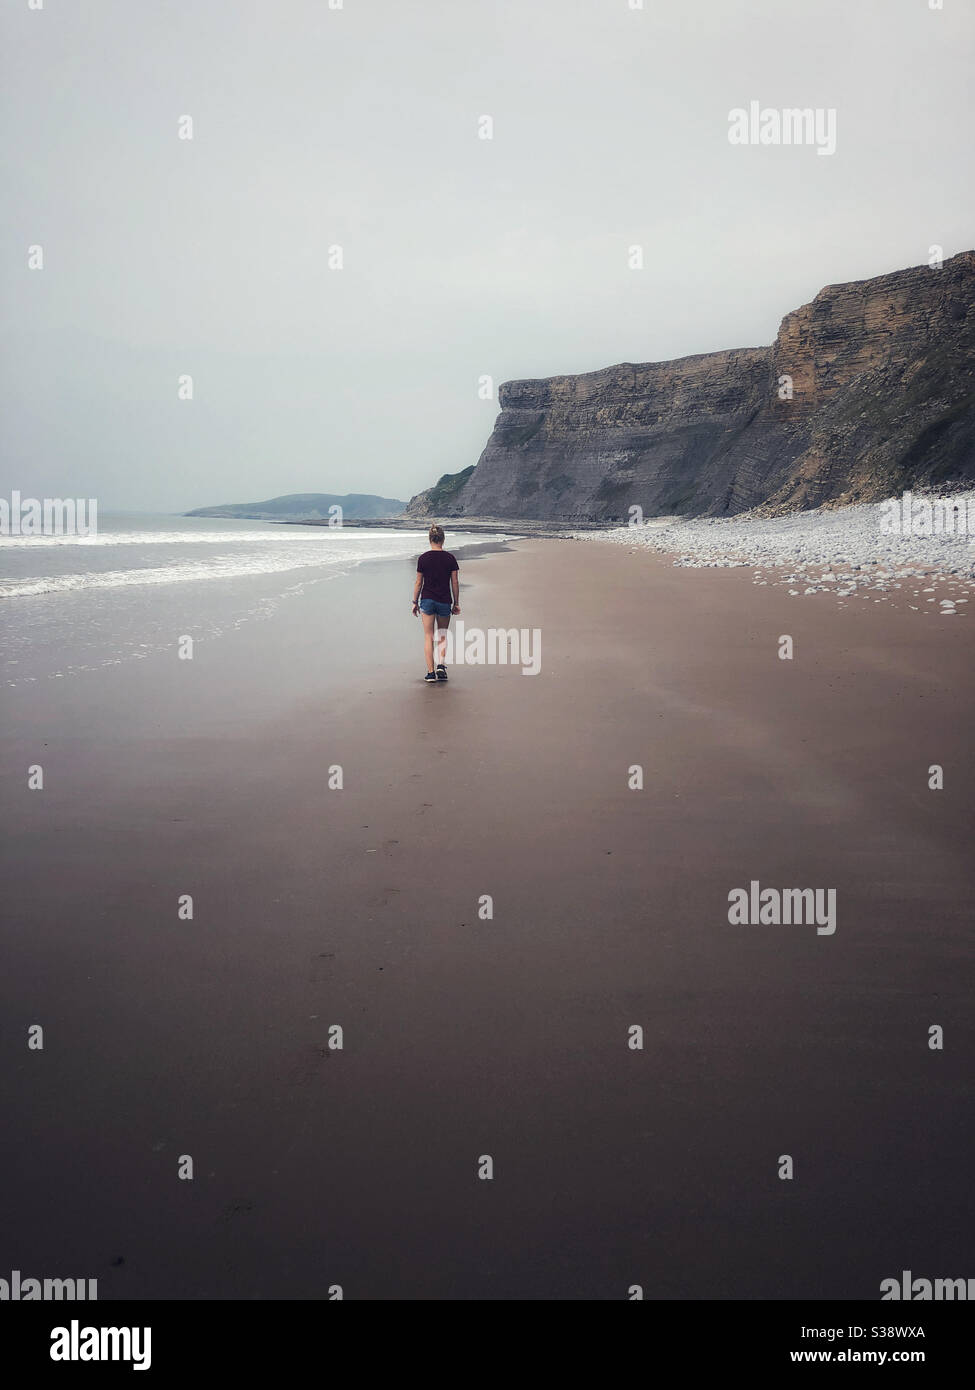 Young girl walking across an deserted beach Stock Photo